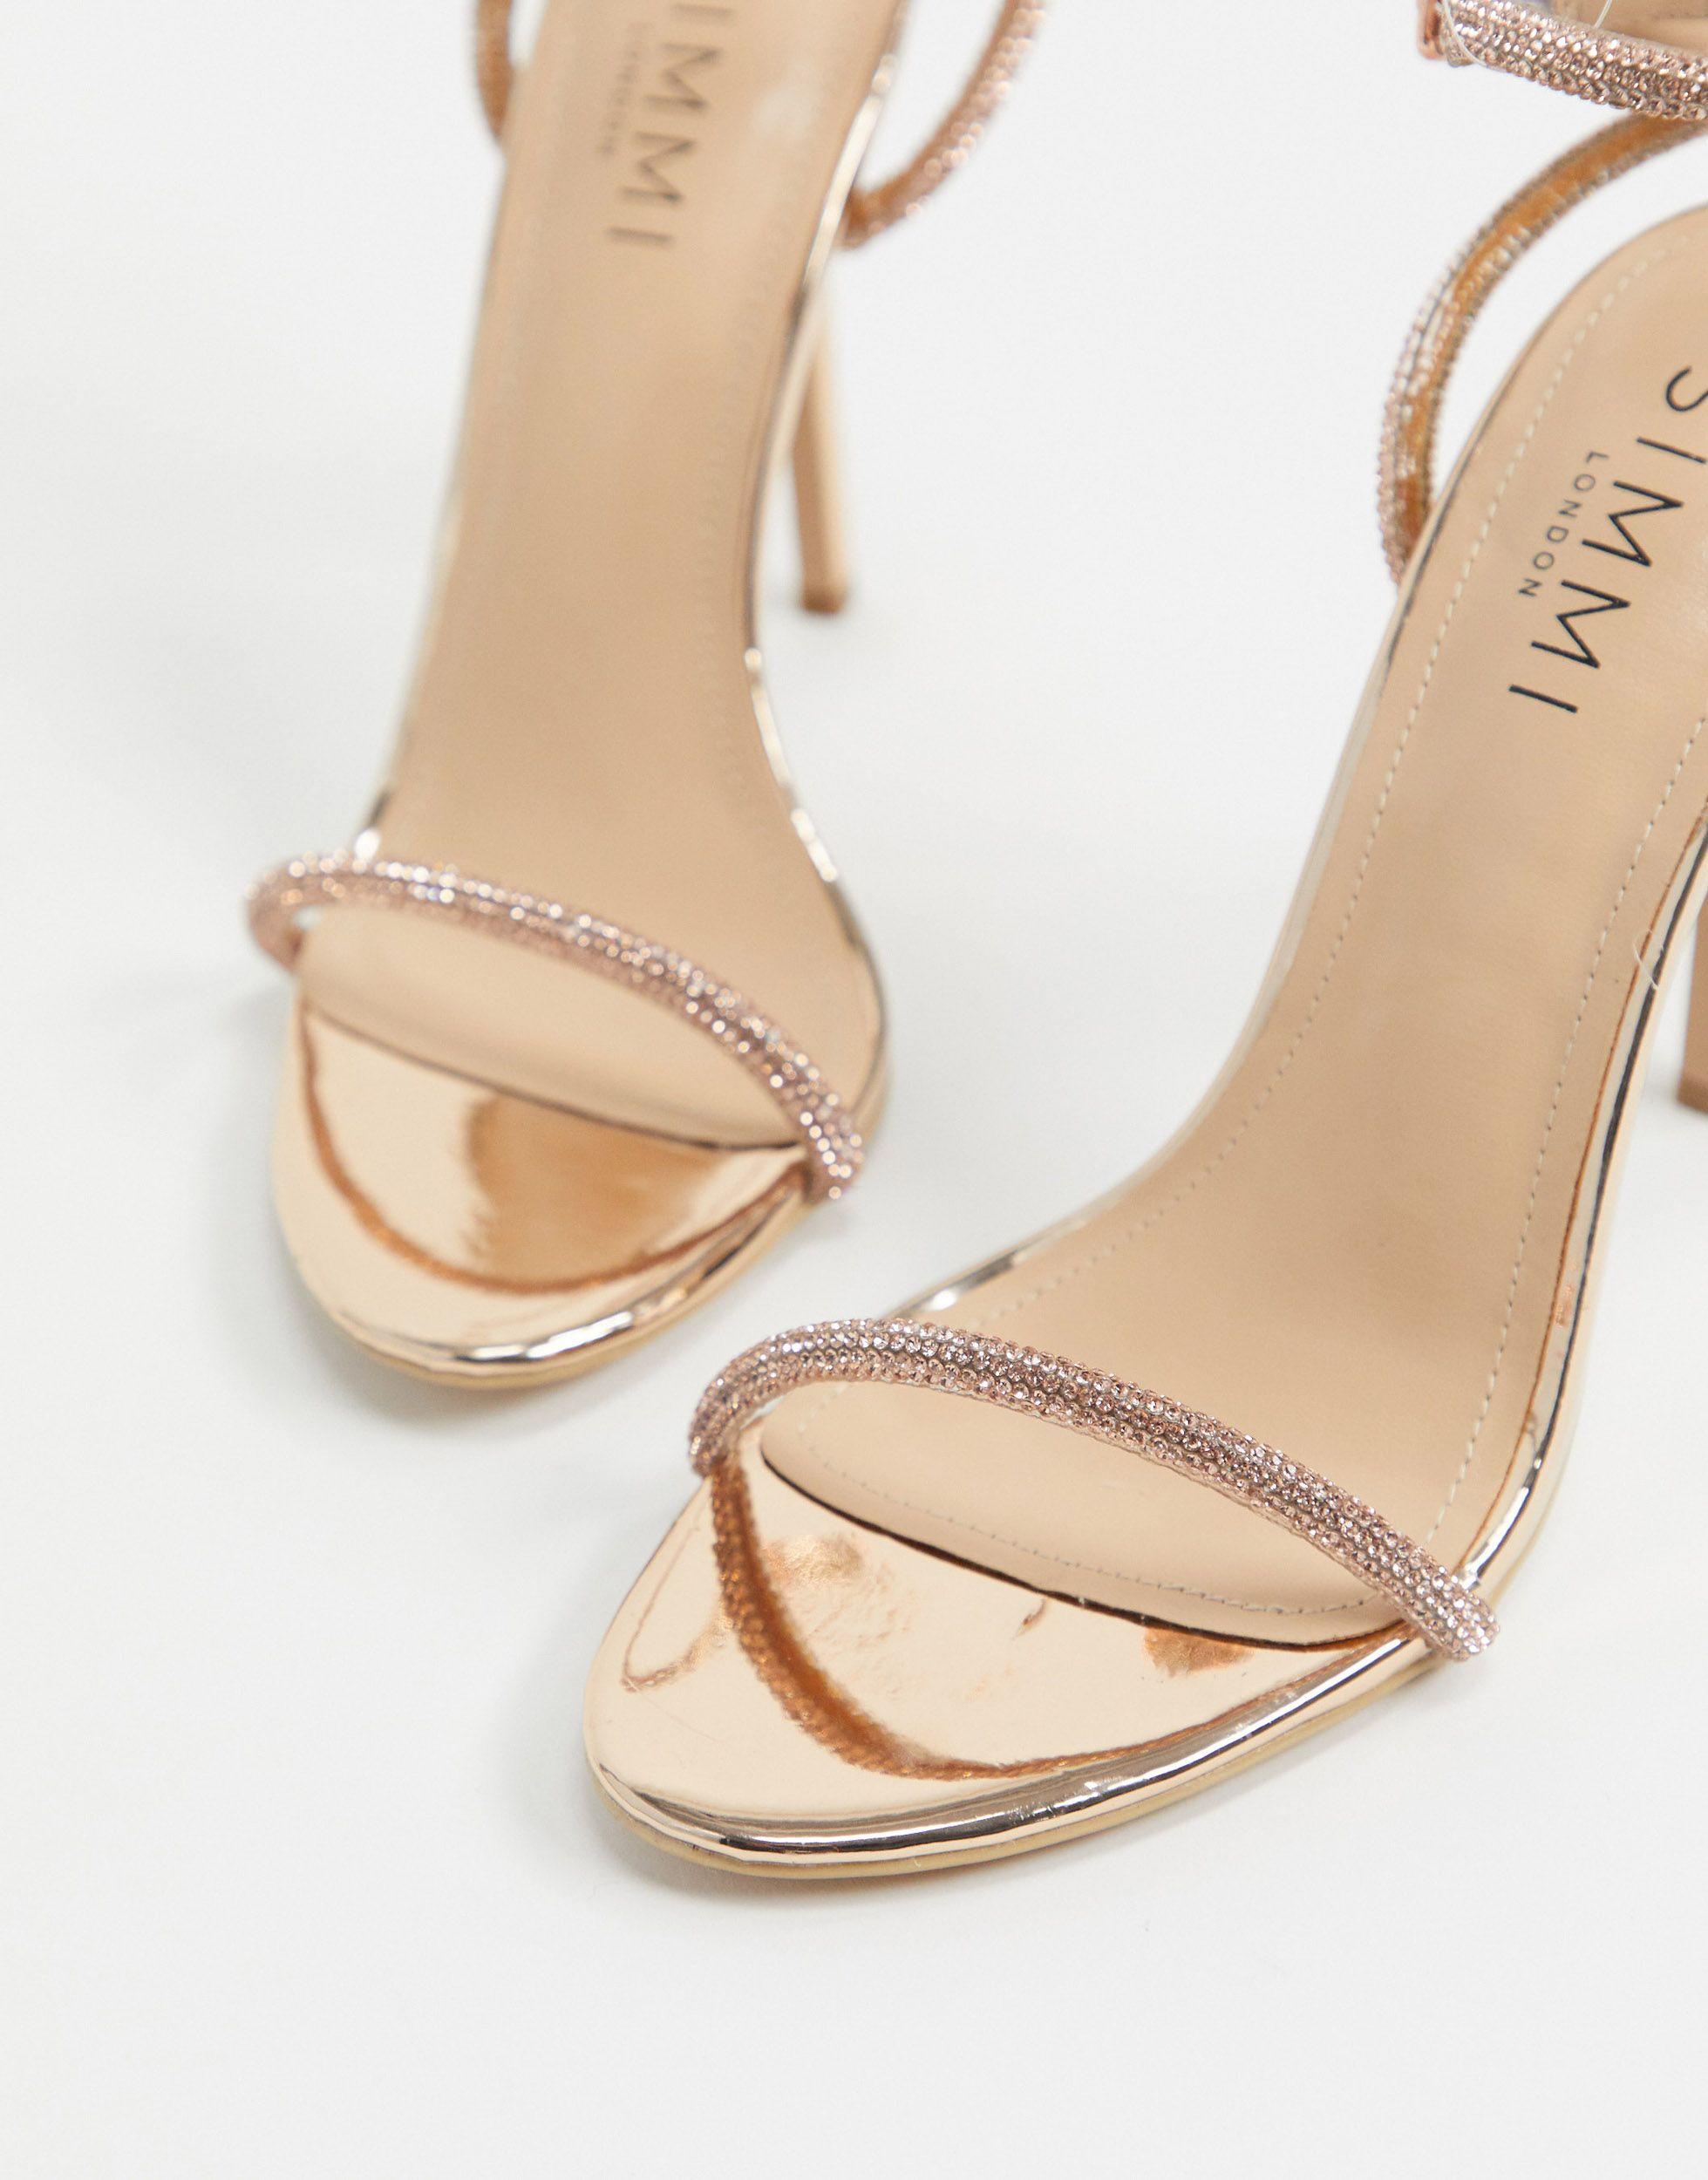 SIMMI Shoes Simmi London Samia Embellished Heeled Sandals in Metallic | Lyst